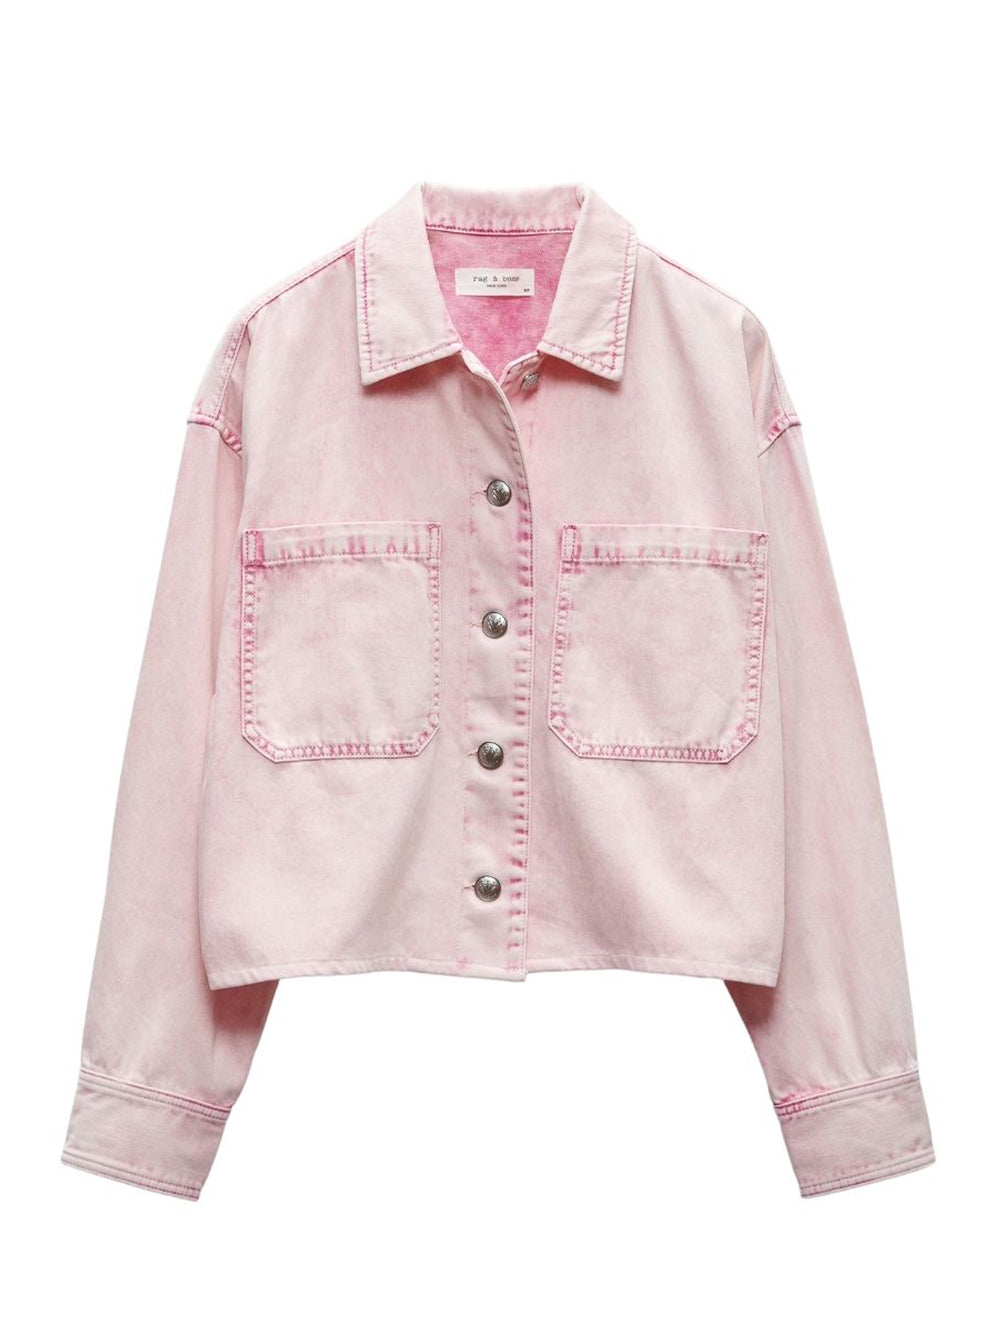 Jaiden Shirt Jacket (Pink Acid)